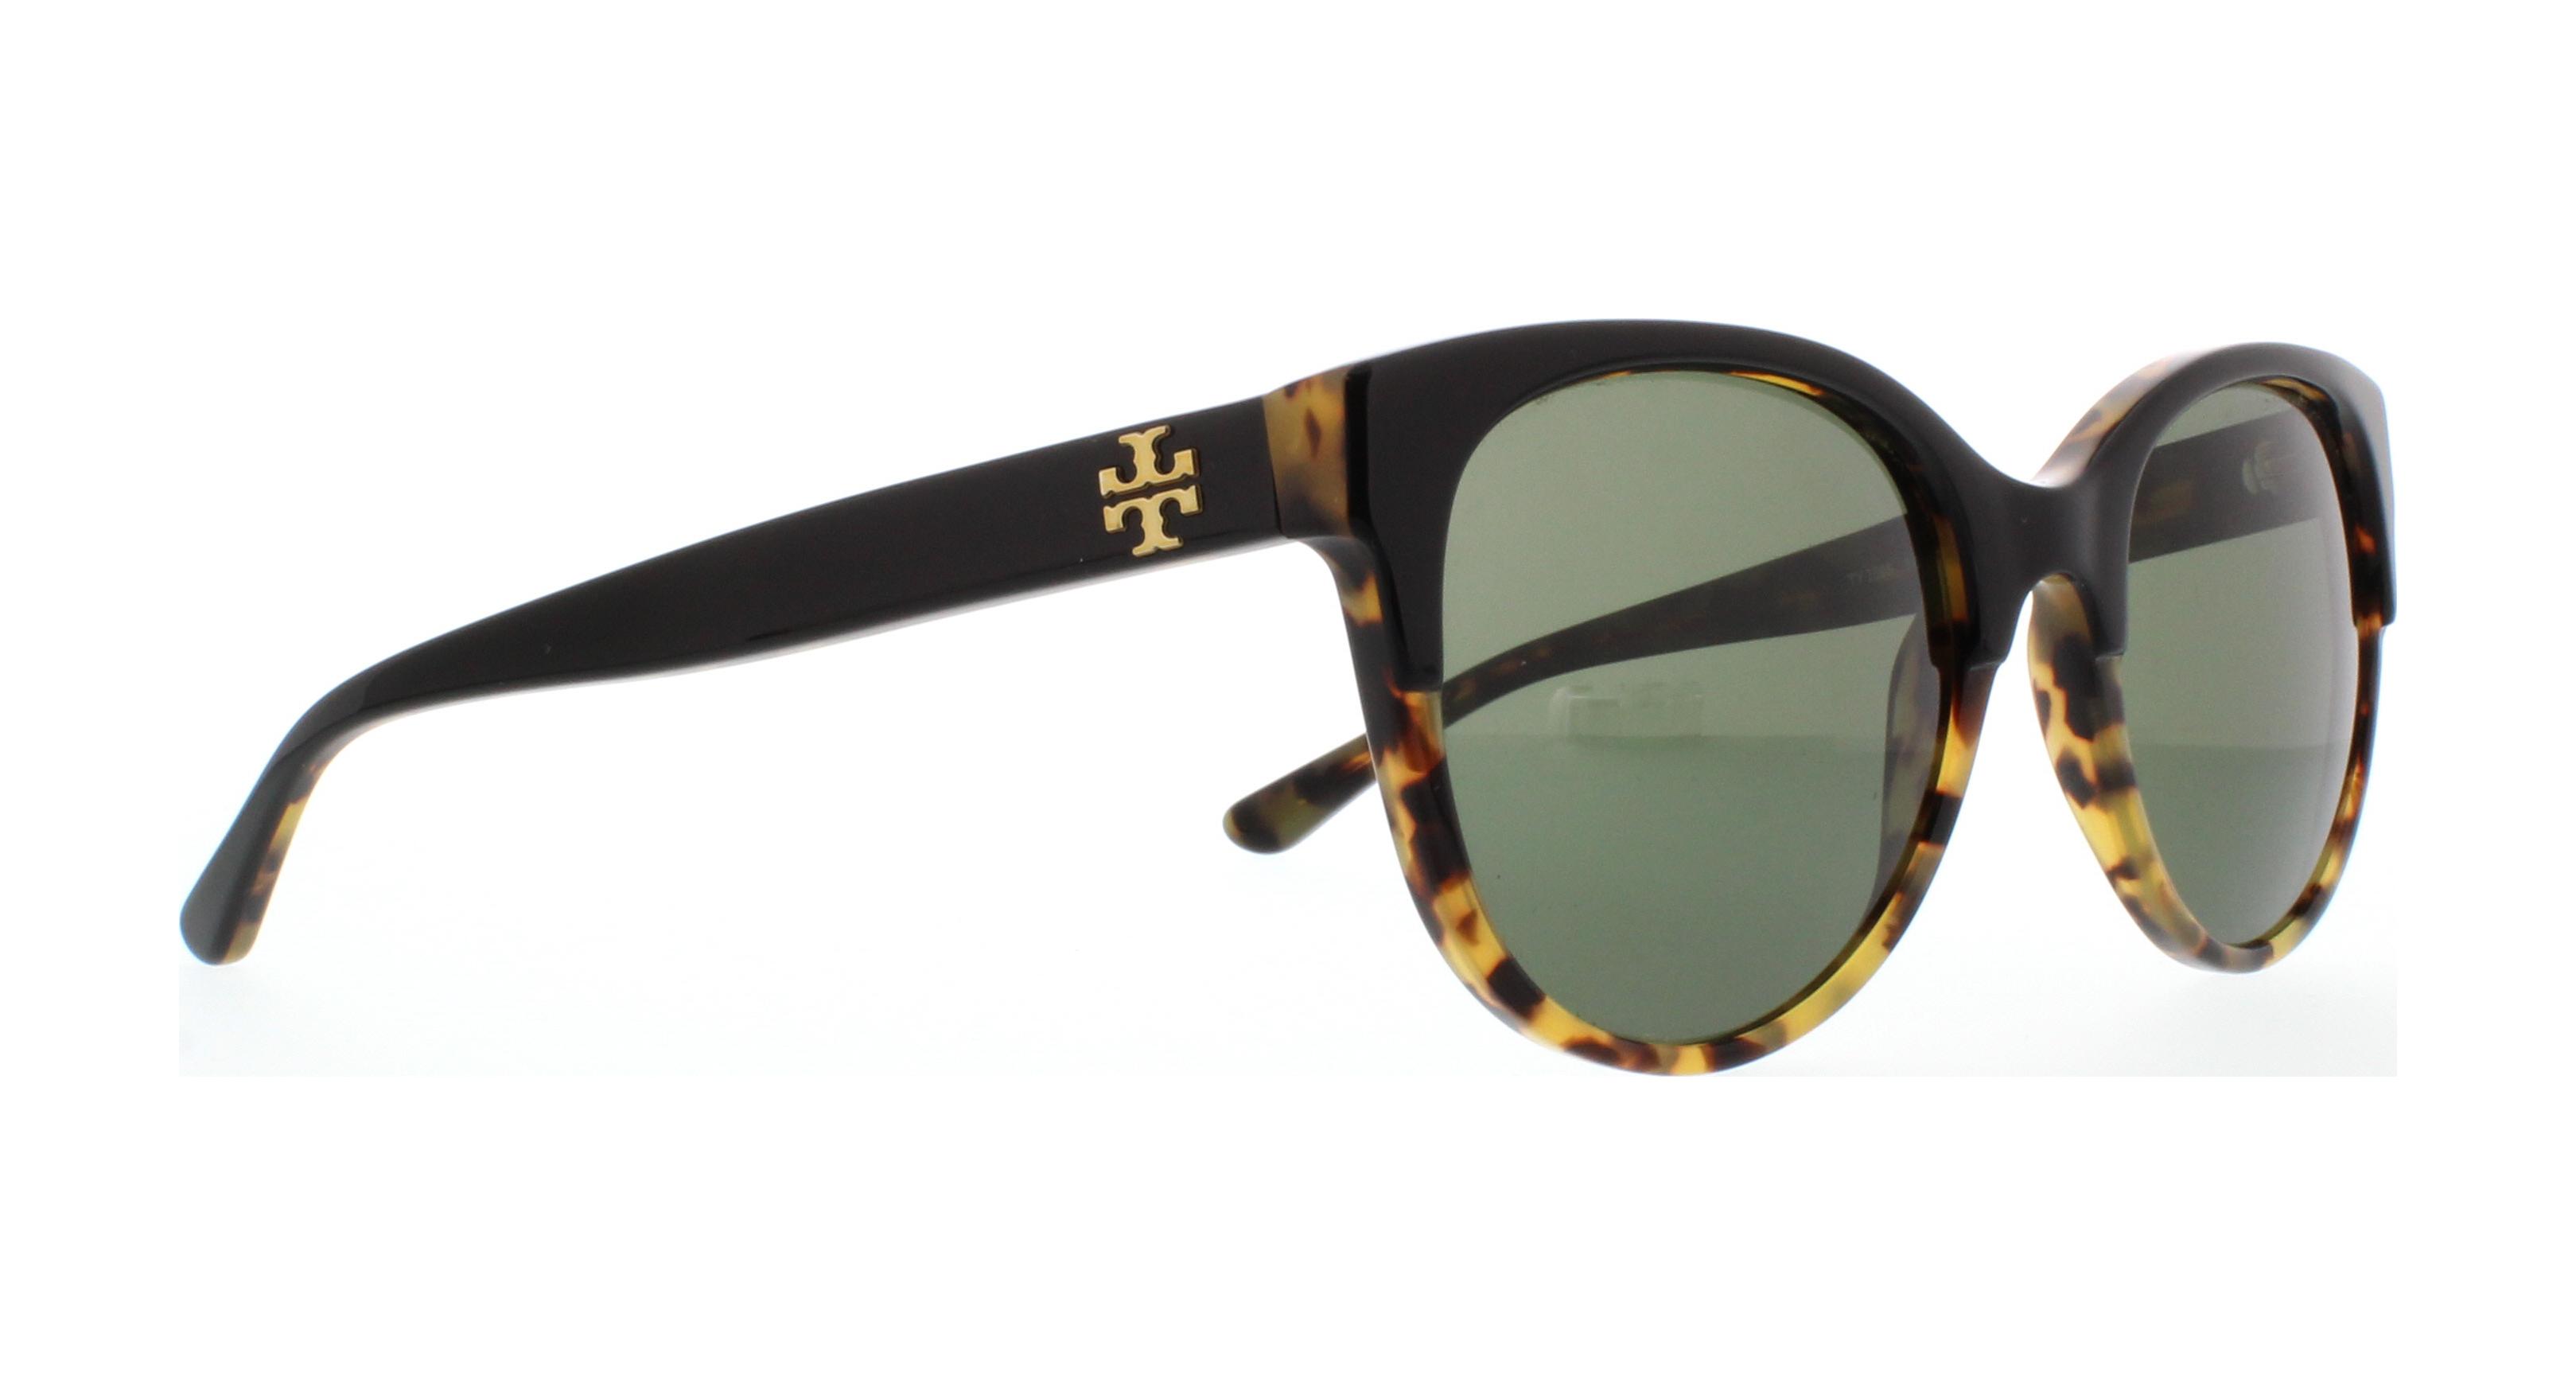 Tory Burch TY7095 Sunglasses 160113-54 Black/Tortoise Frame, Dark Brown  TY7095-160113-54 .ng